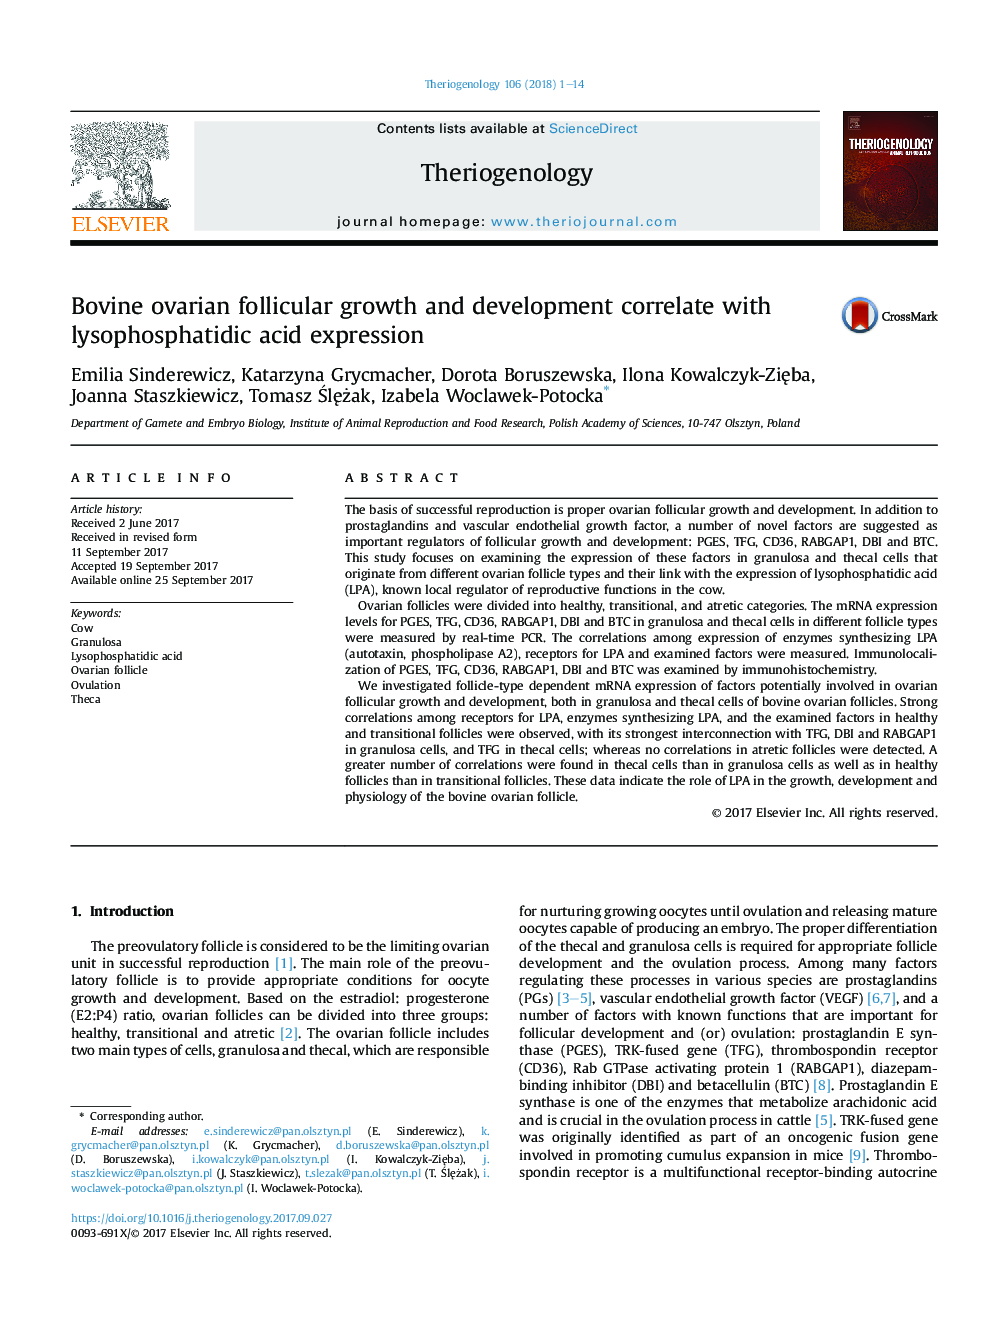 Bovine ovarian follicular growth and development correlate with lysophosphatidic acid expression